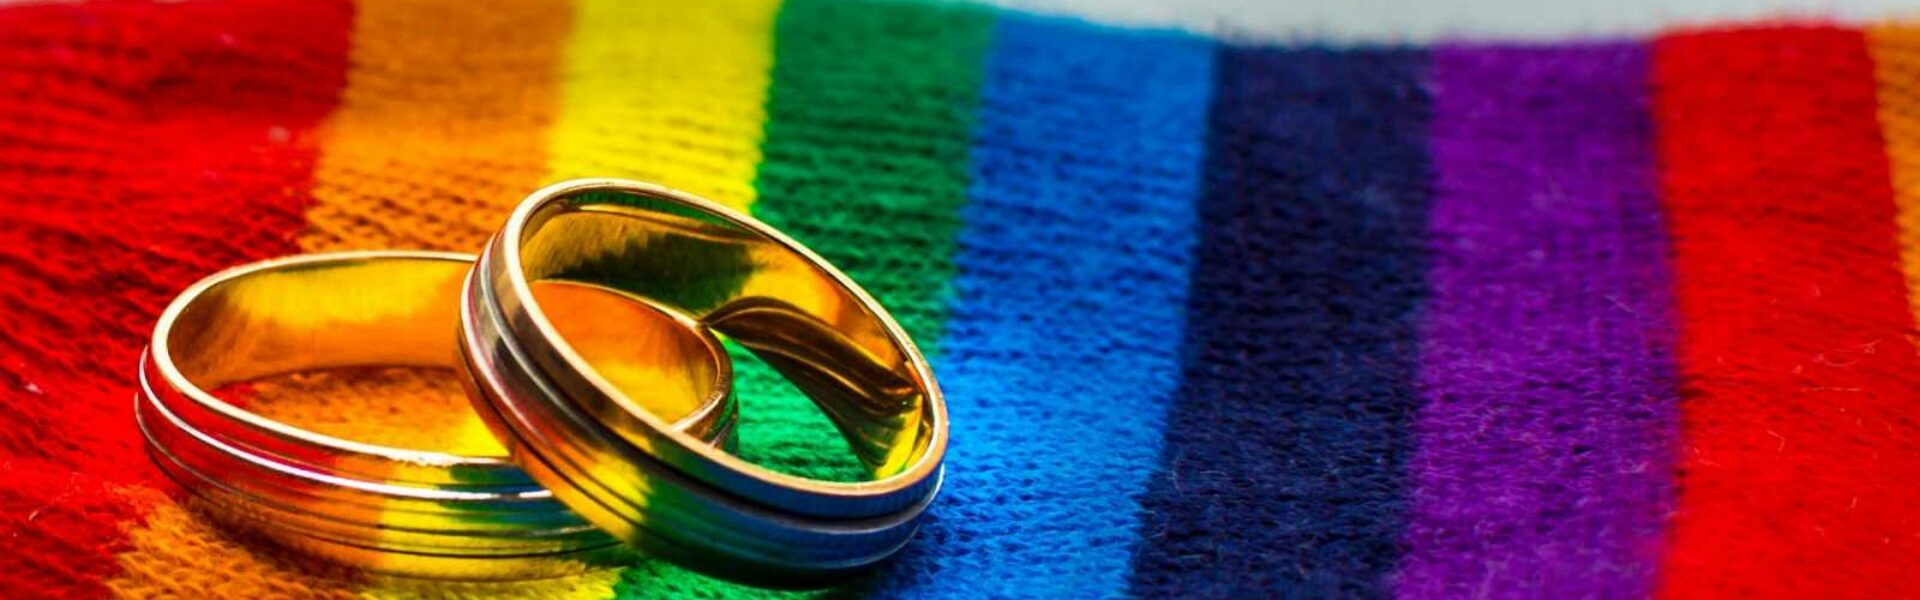 Se aprueba matrimonio igualitario thumbnail